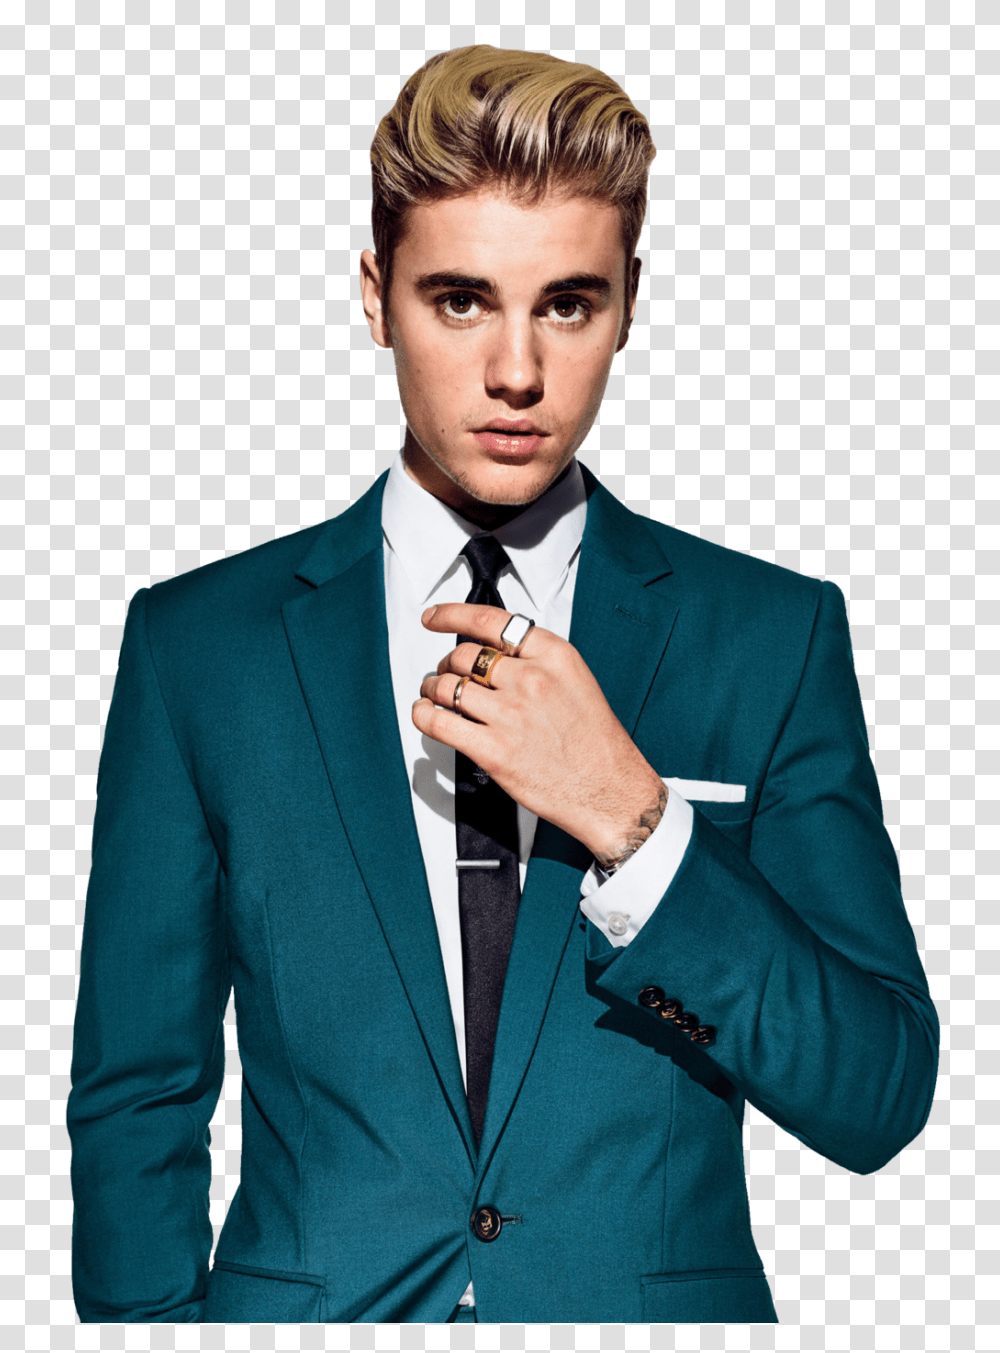 Justin Bieber Picture, Apparel, Suit, Overcoat Transparent Png